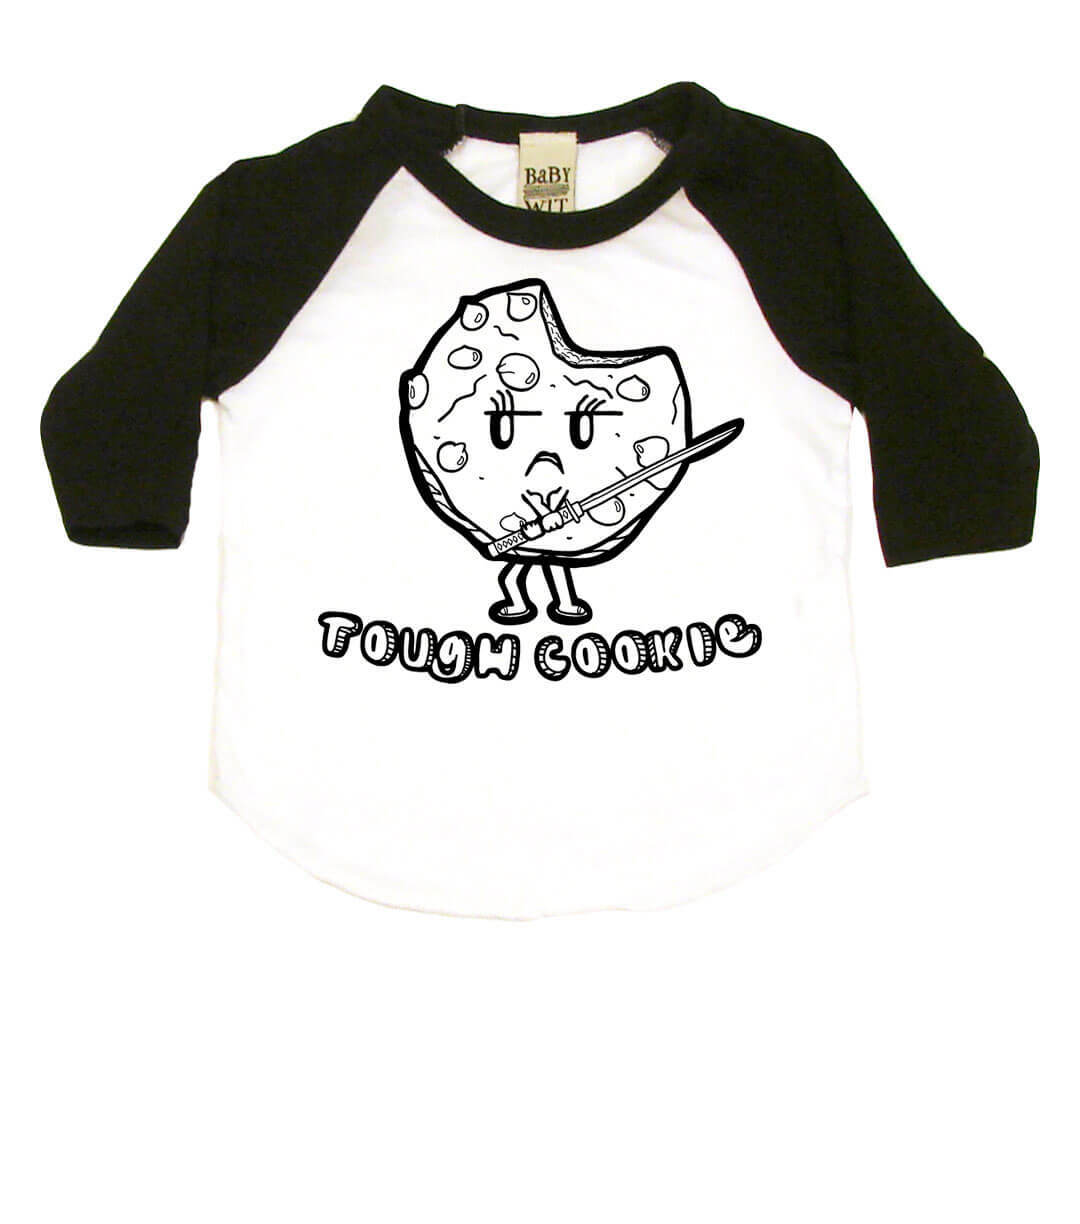 Tough Cookie Infant Bodysuit or Raglan Tee-White/Black-3-6 months